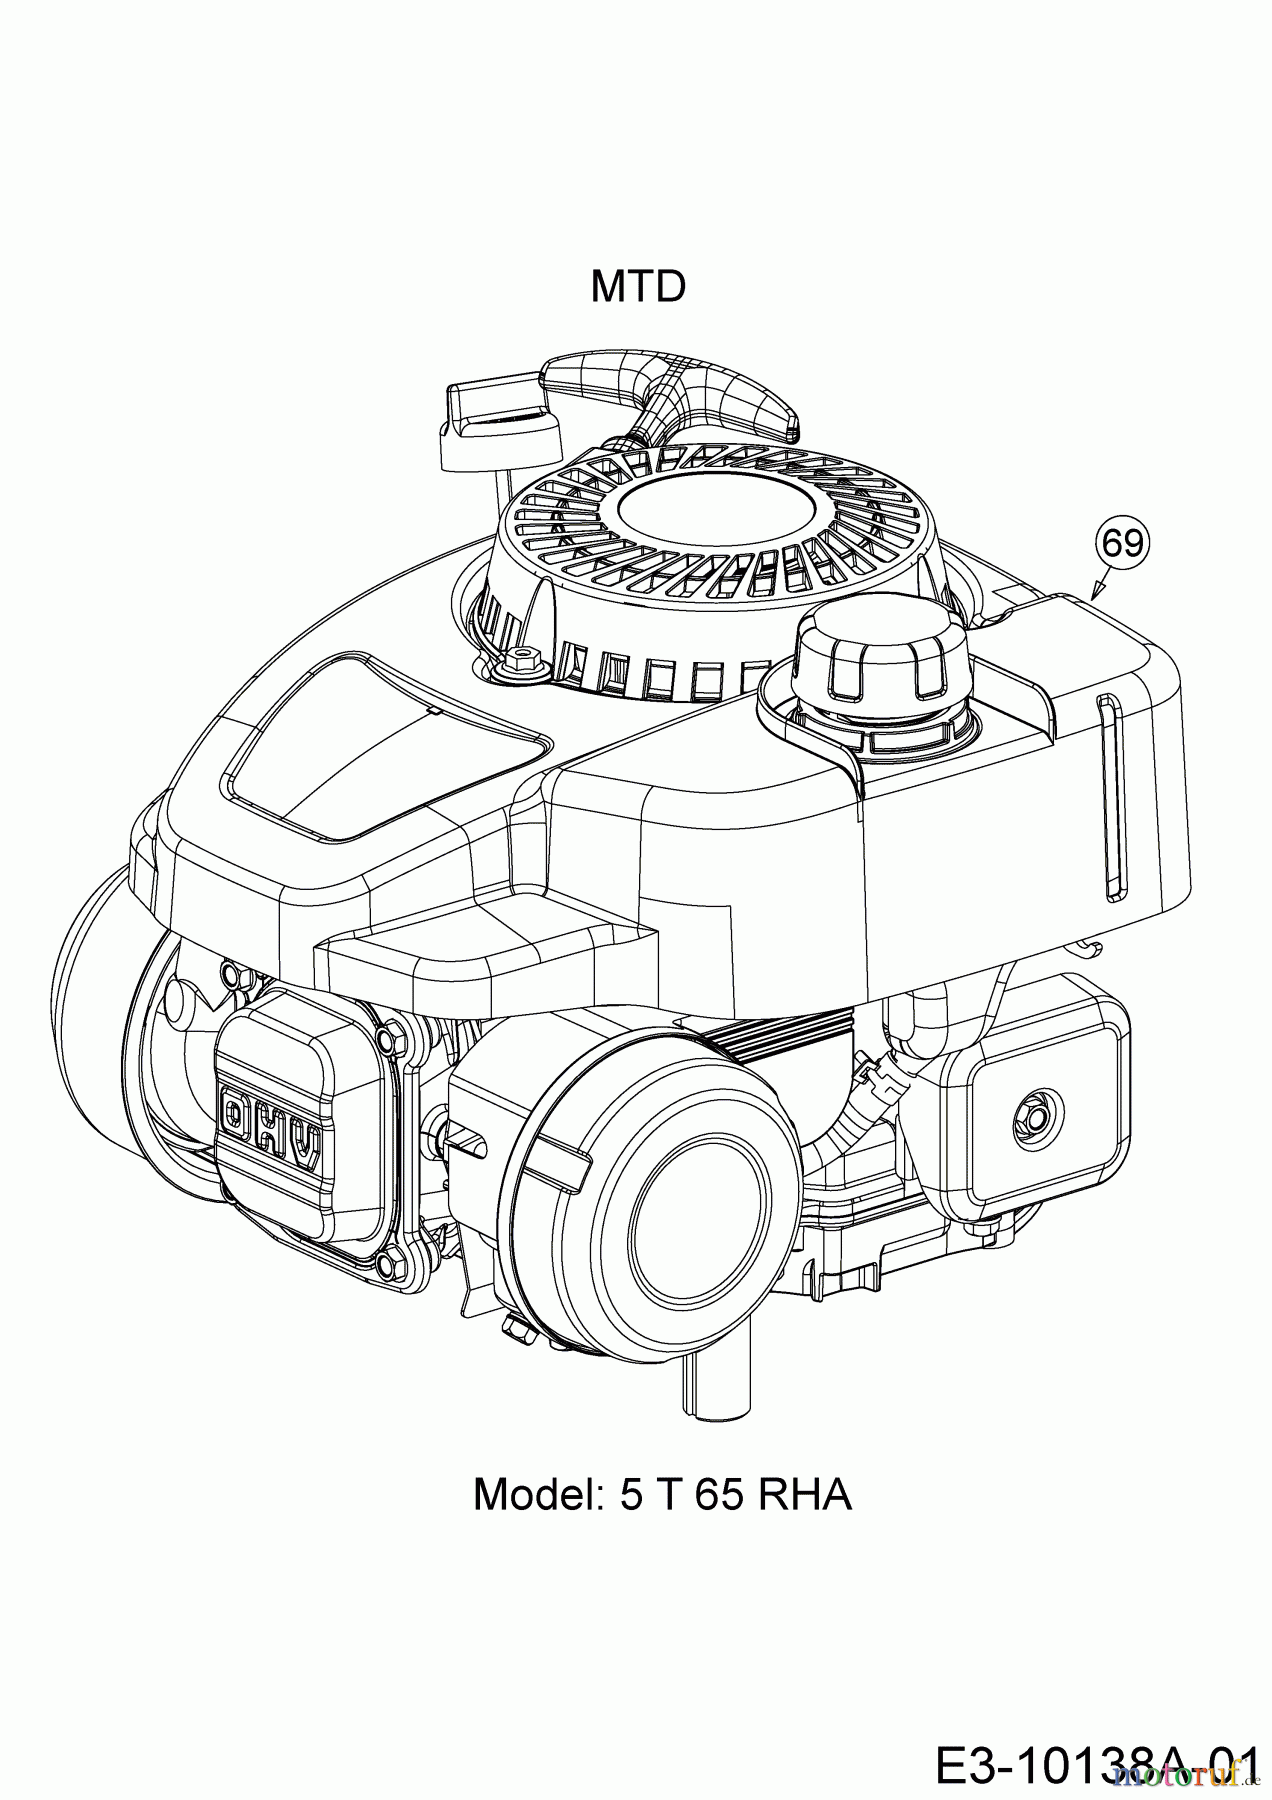  Cub Cadet Petrol mower LM 1 CP 46 11A-TQSC603  (2017) Engine MTD